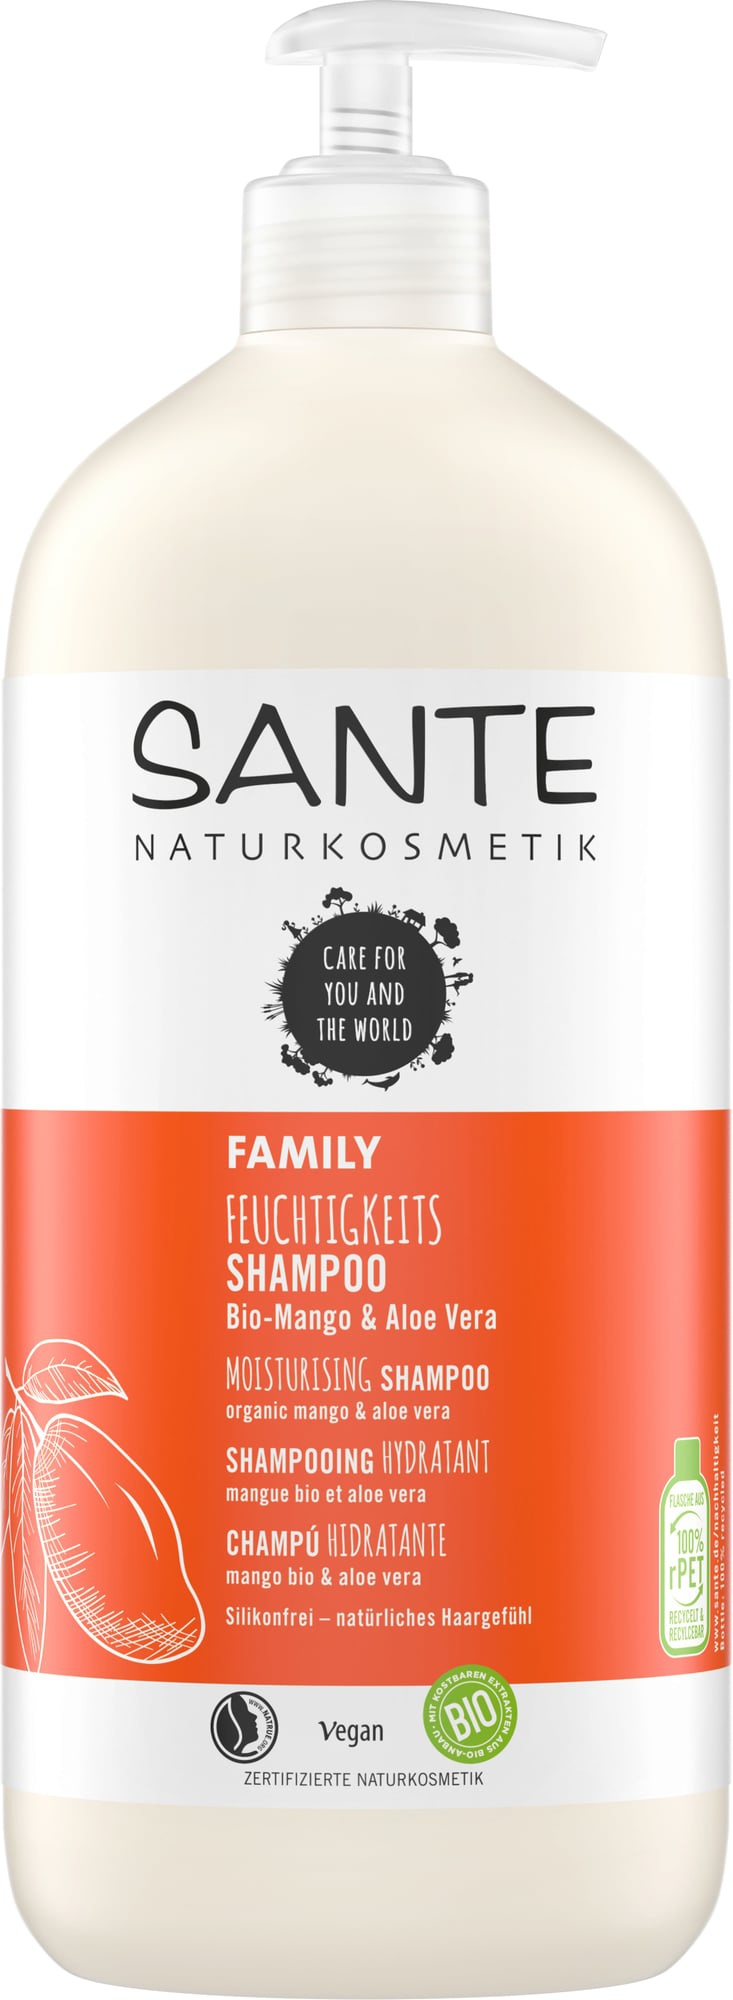 Sante Naturkosmetik Moisturising Shampoo Organic Mango & Aloe Vera